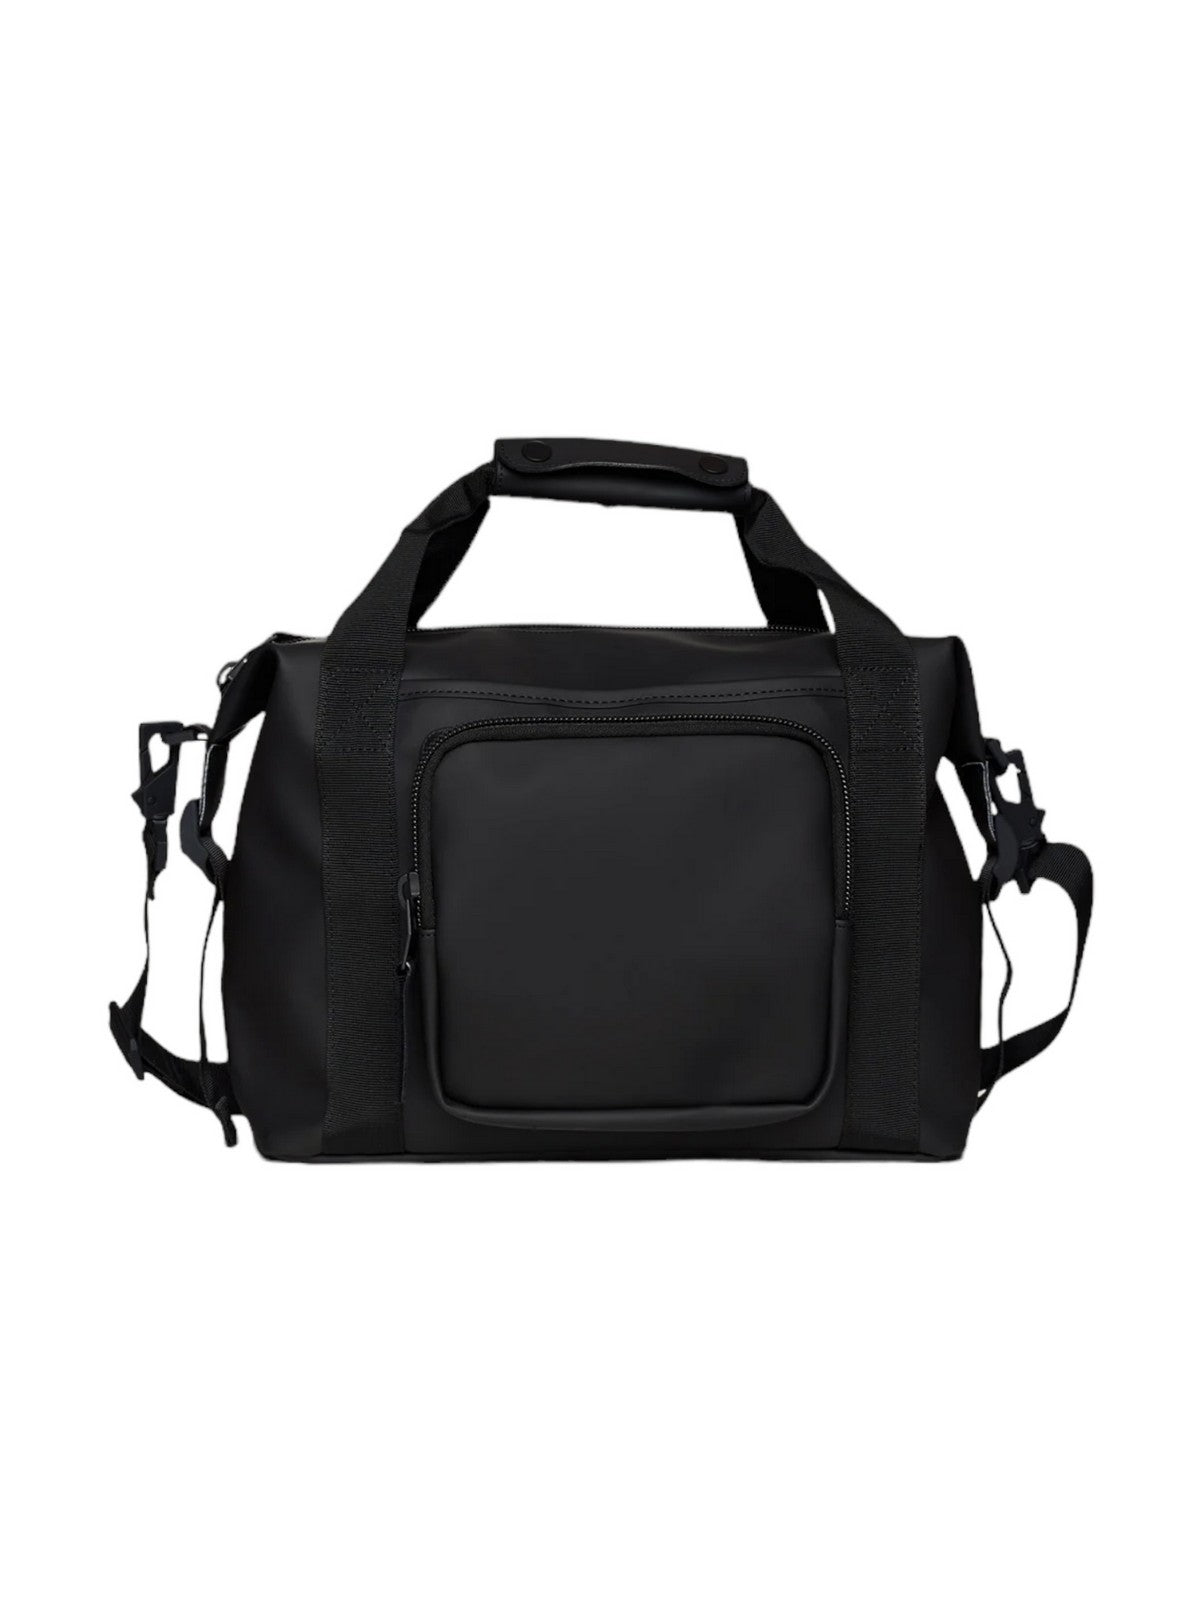 RAINS Borsa Unisex adulto Texel Kit Bag W3 14230 01 Black Nero